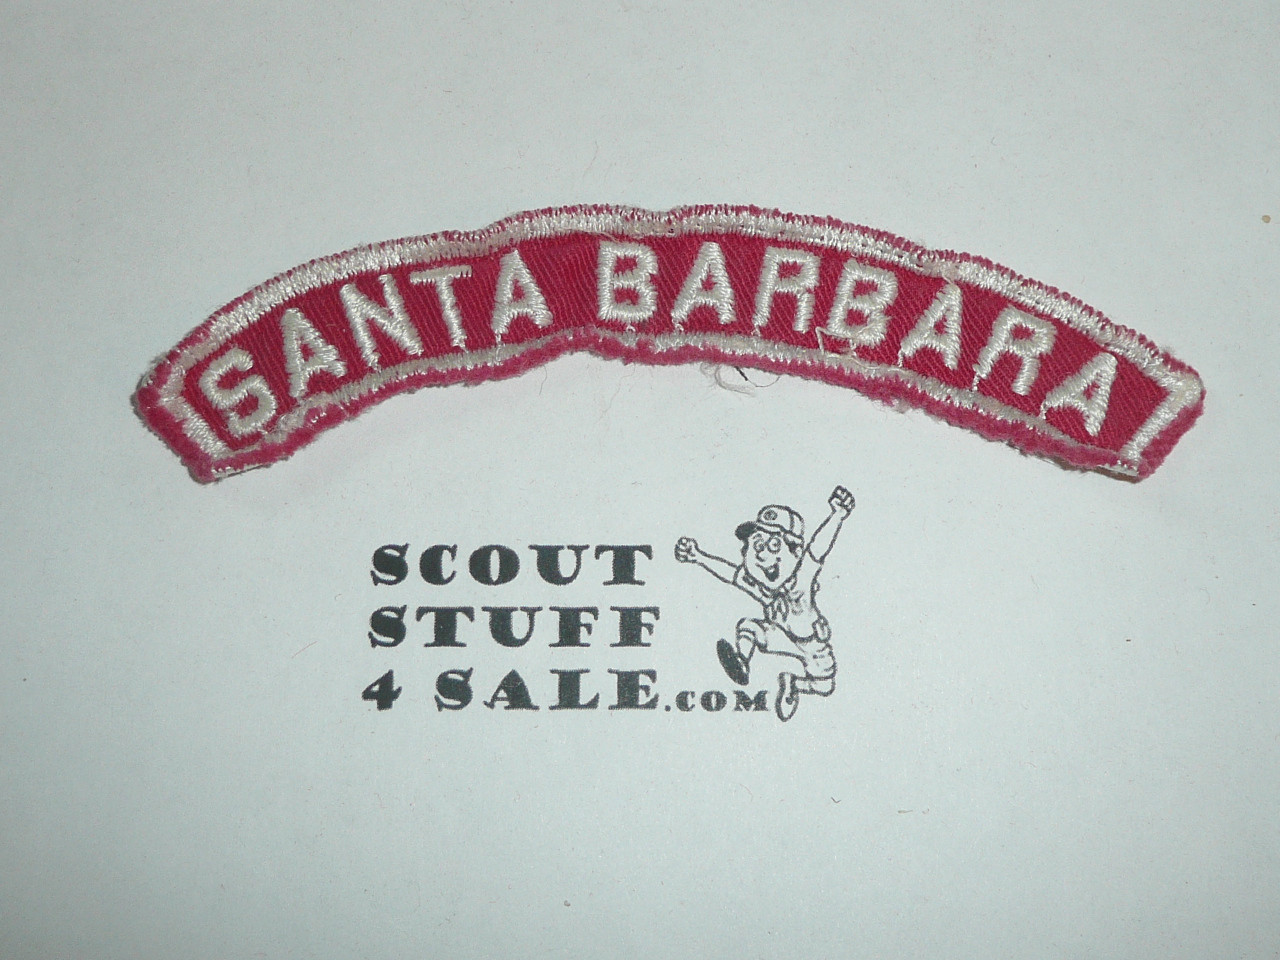 SANTA BARBARA Red and White Community Strip, sewn